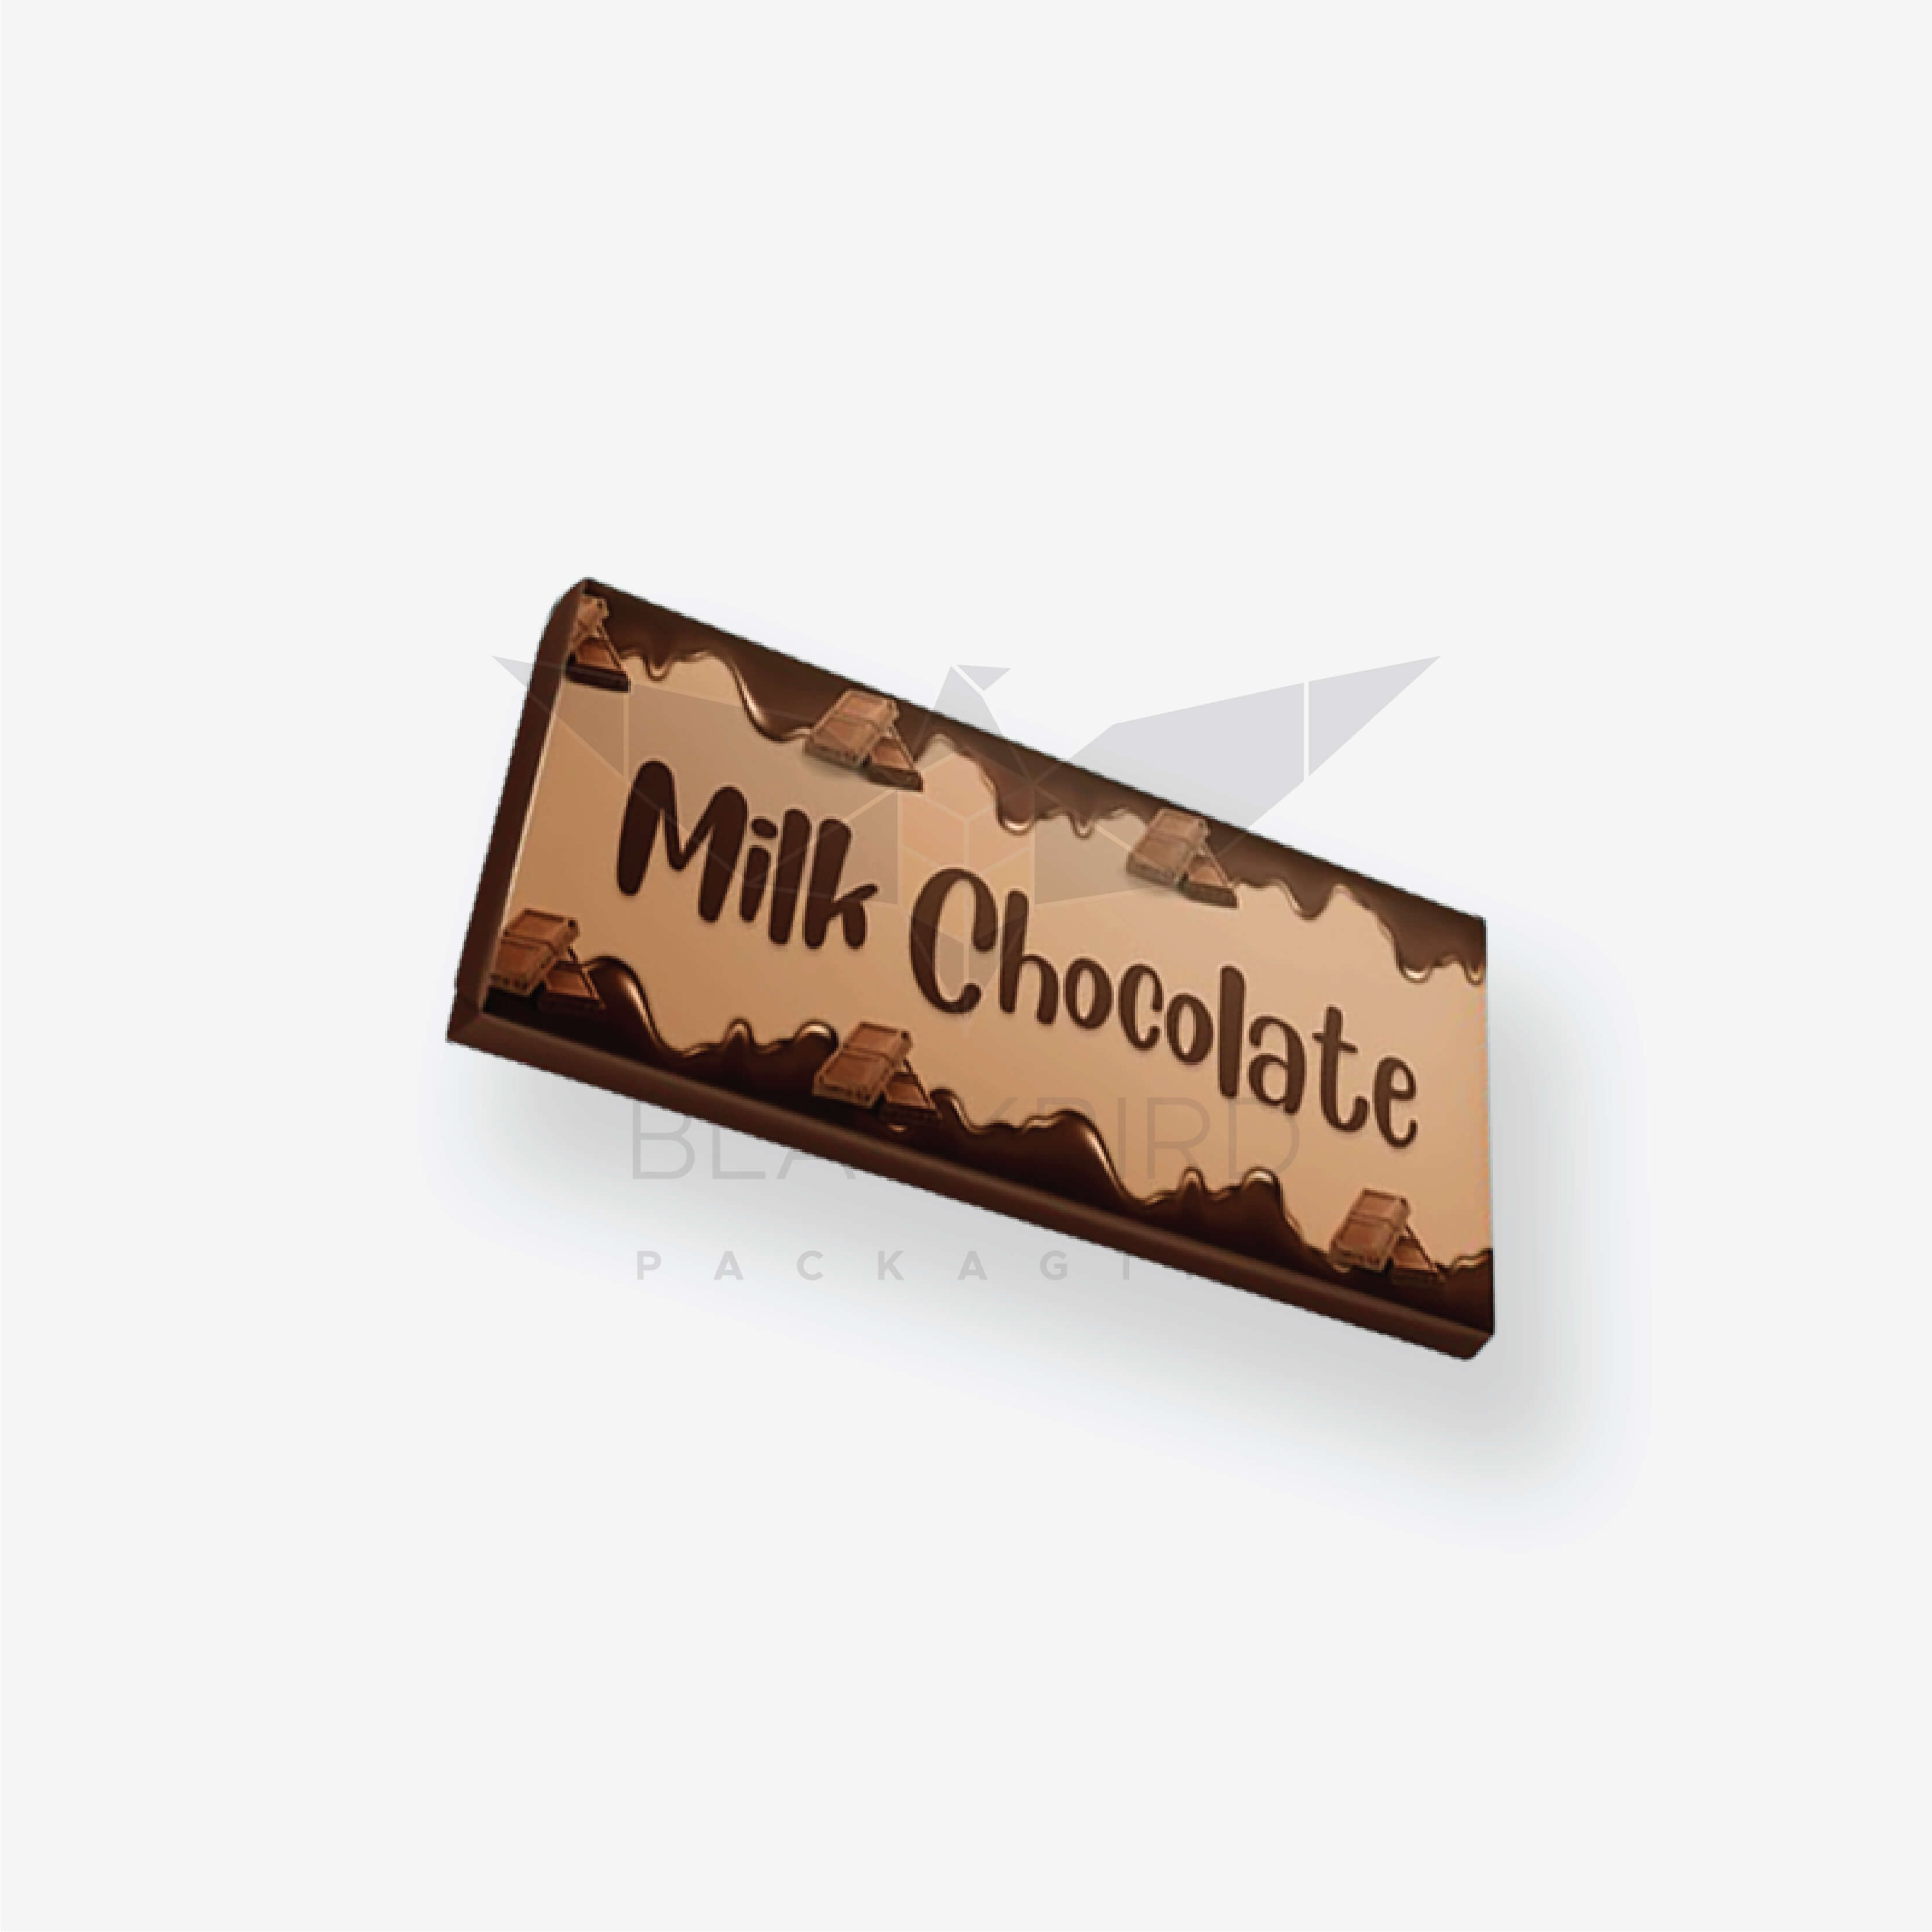 Custom Printed Chocolate Boxes